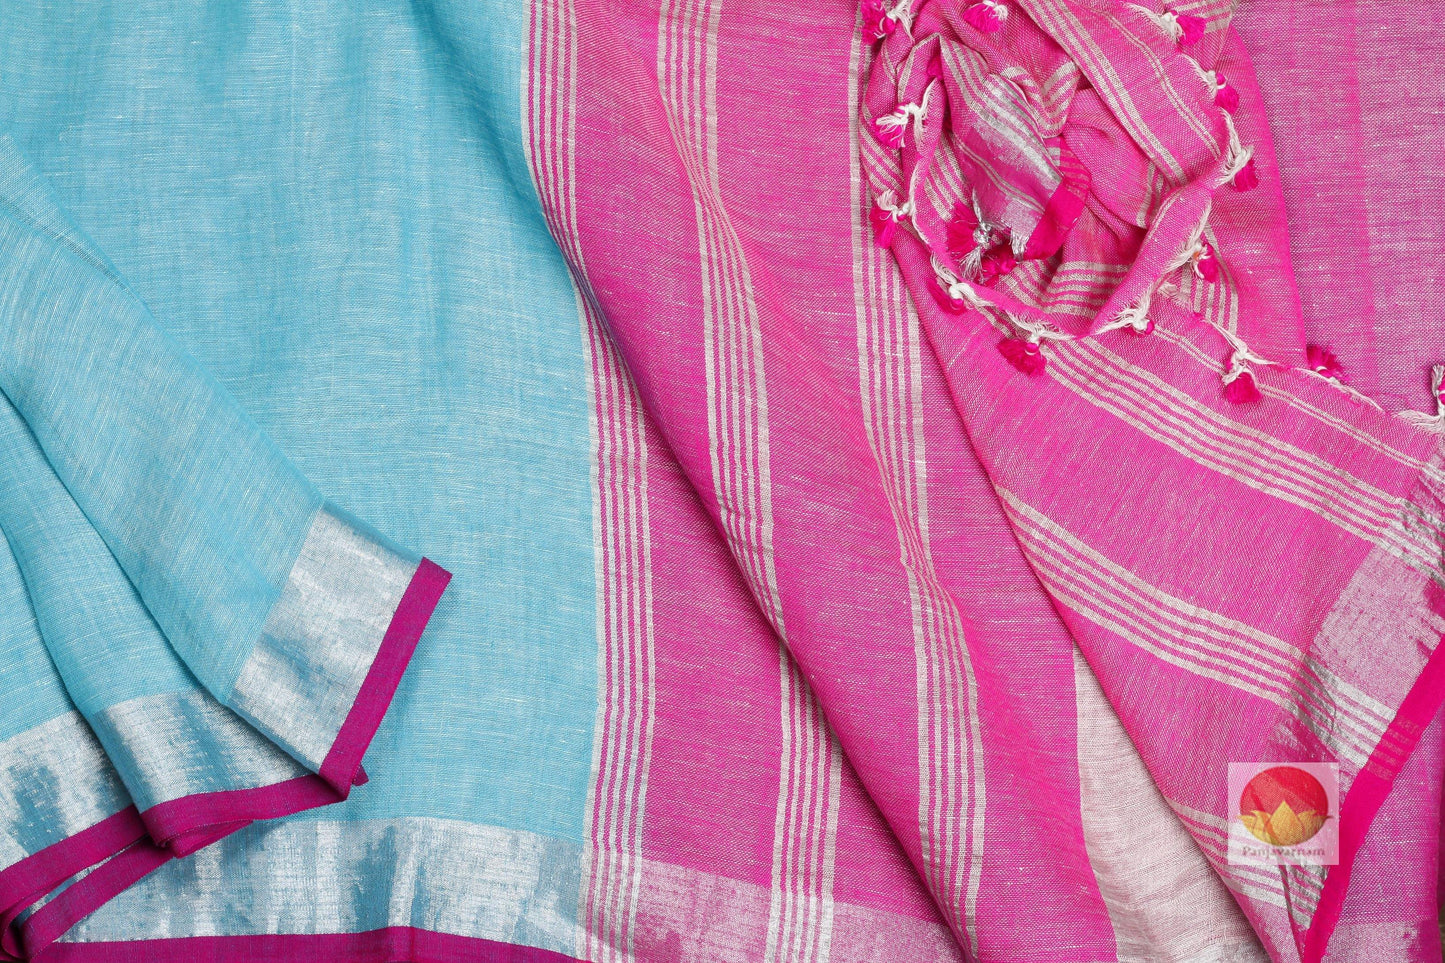 body, border and pallu of handwoven linen saree